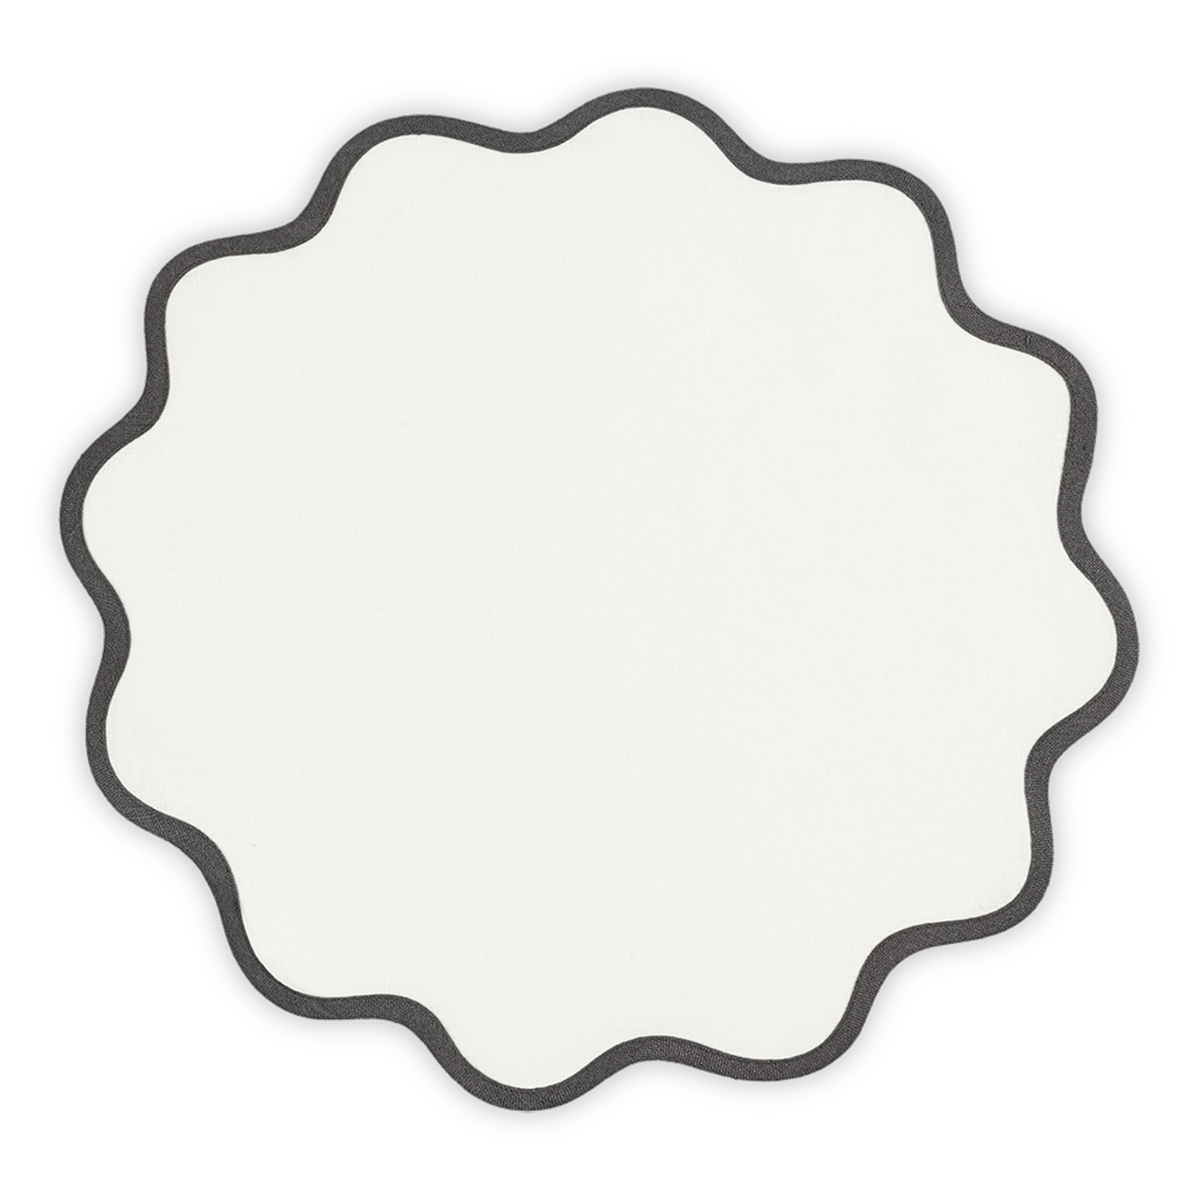 Silo Image of Matouk Scallop Edge Circle Placemat in Color Smoke Grey